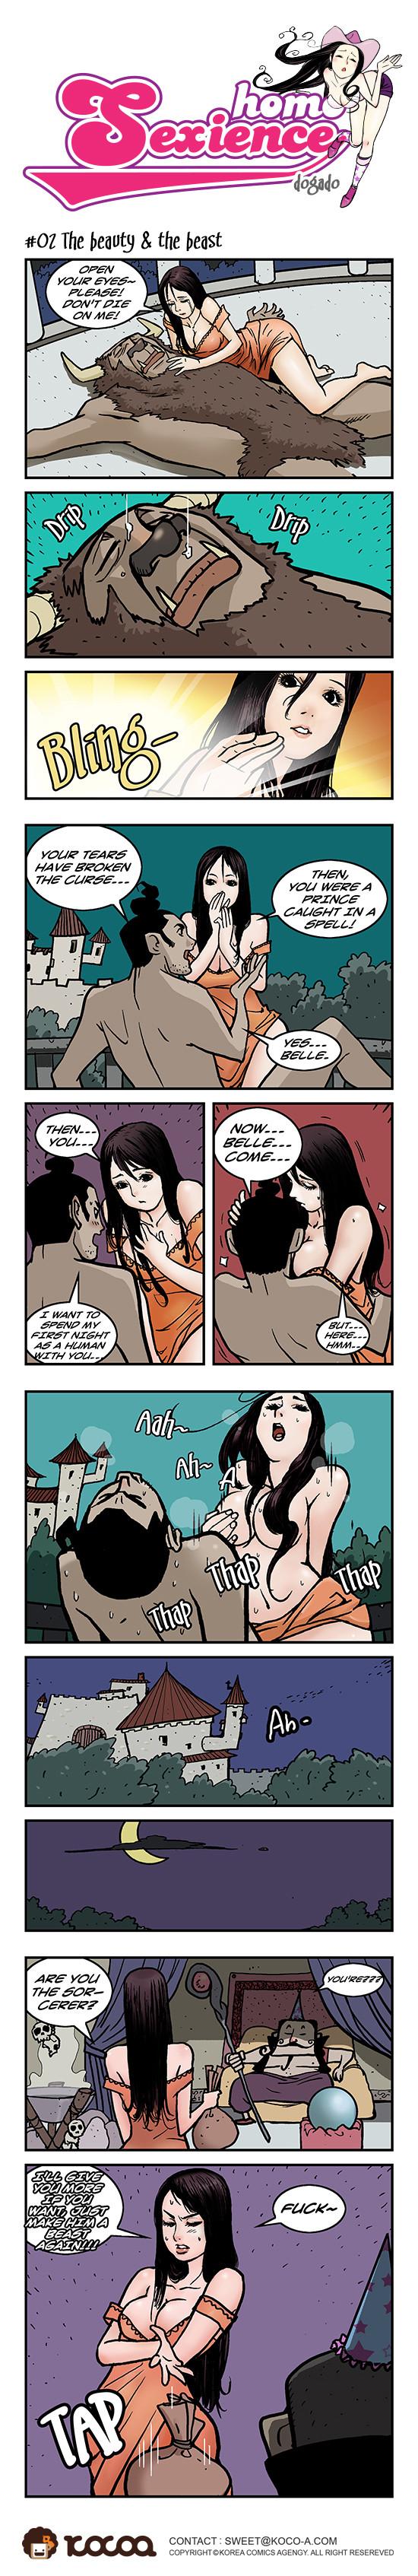 Bj Homo Sexience Cojiendo - Page 2